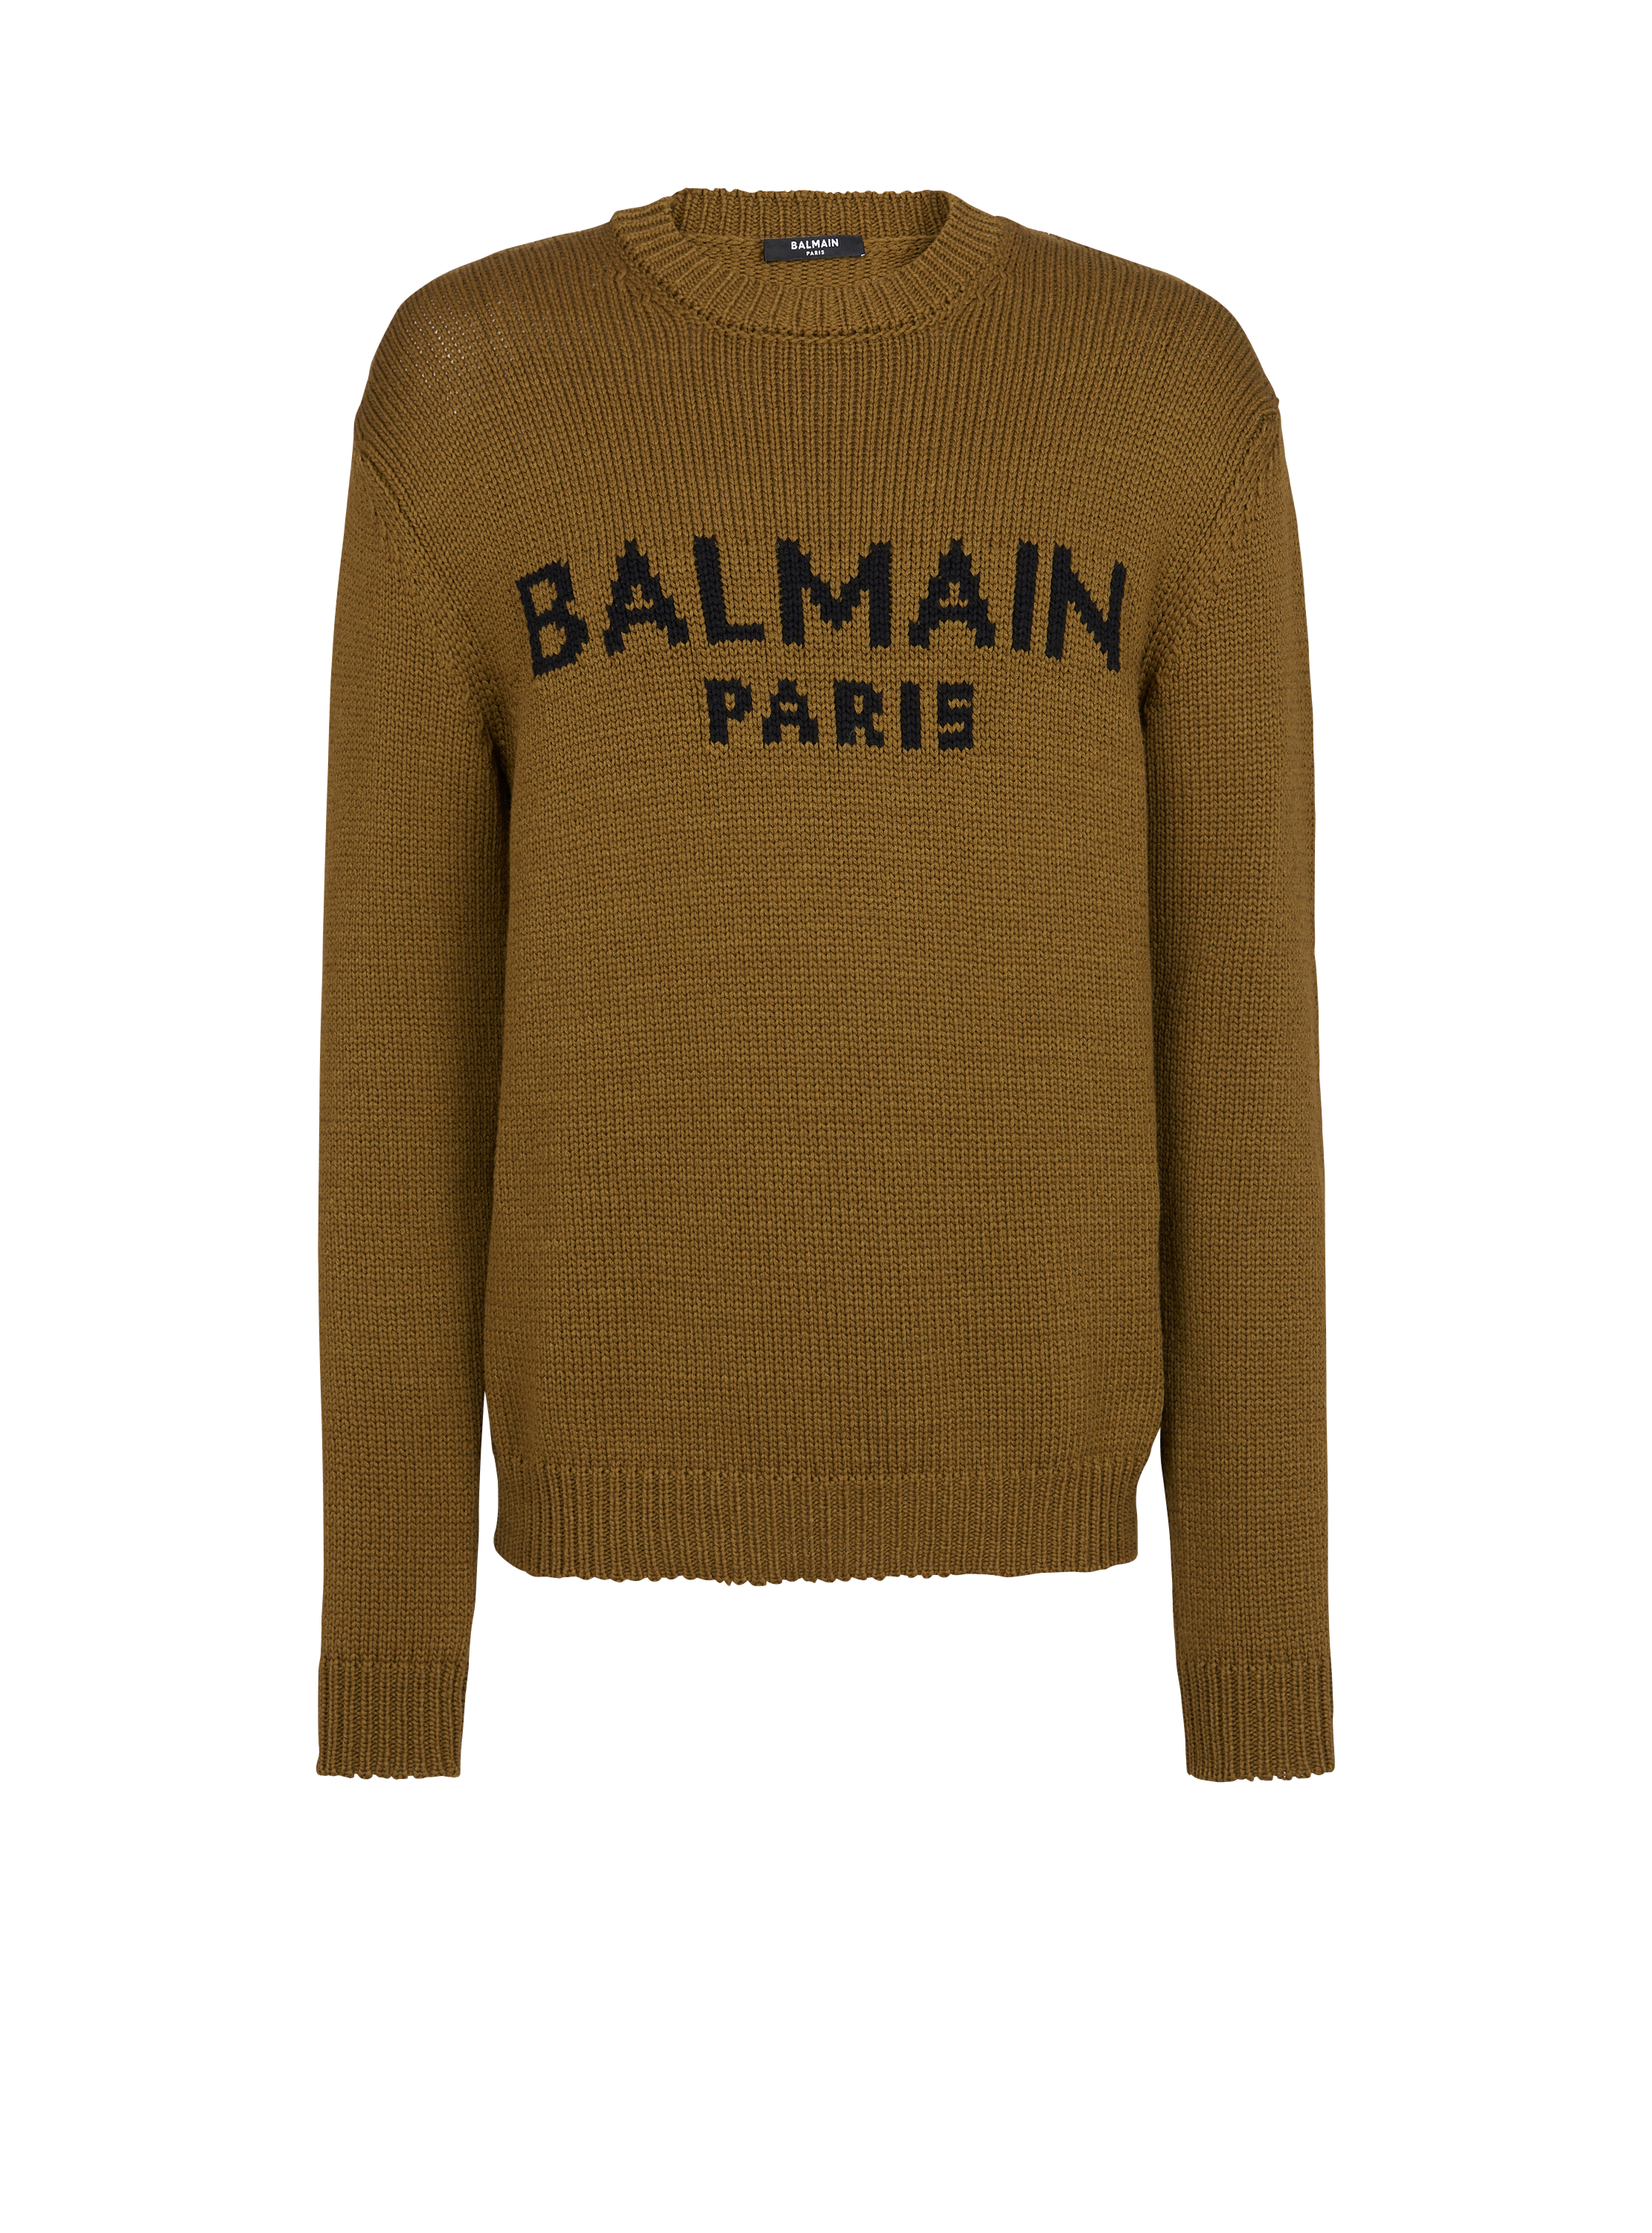 Balmain巴尔曼标志羊毛套头衫, khaki, hi-res